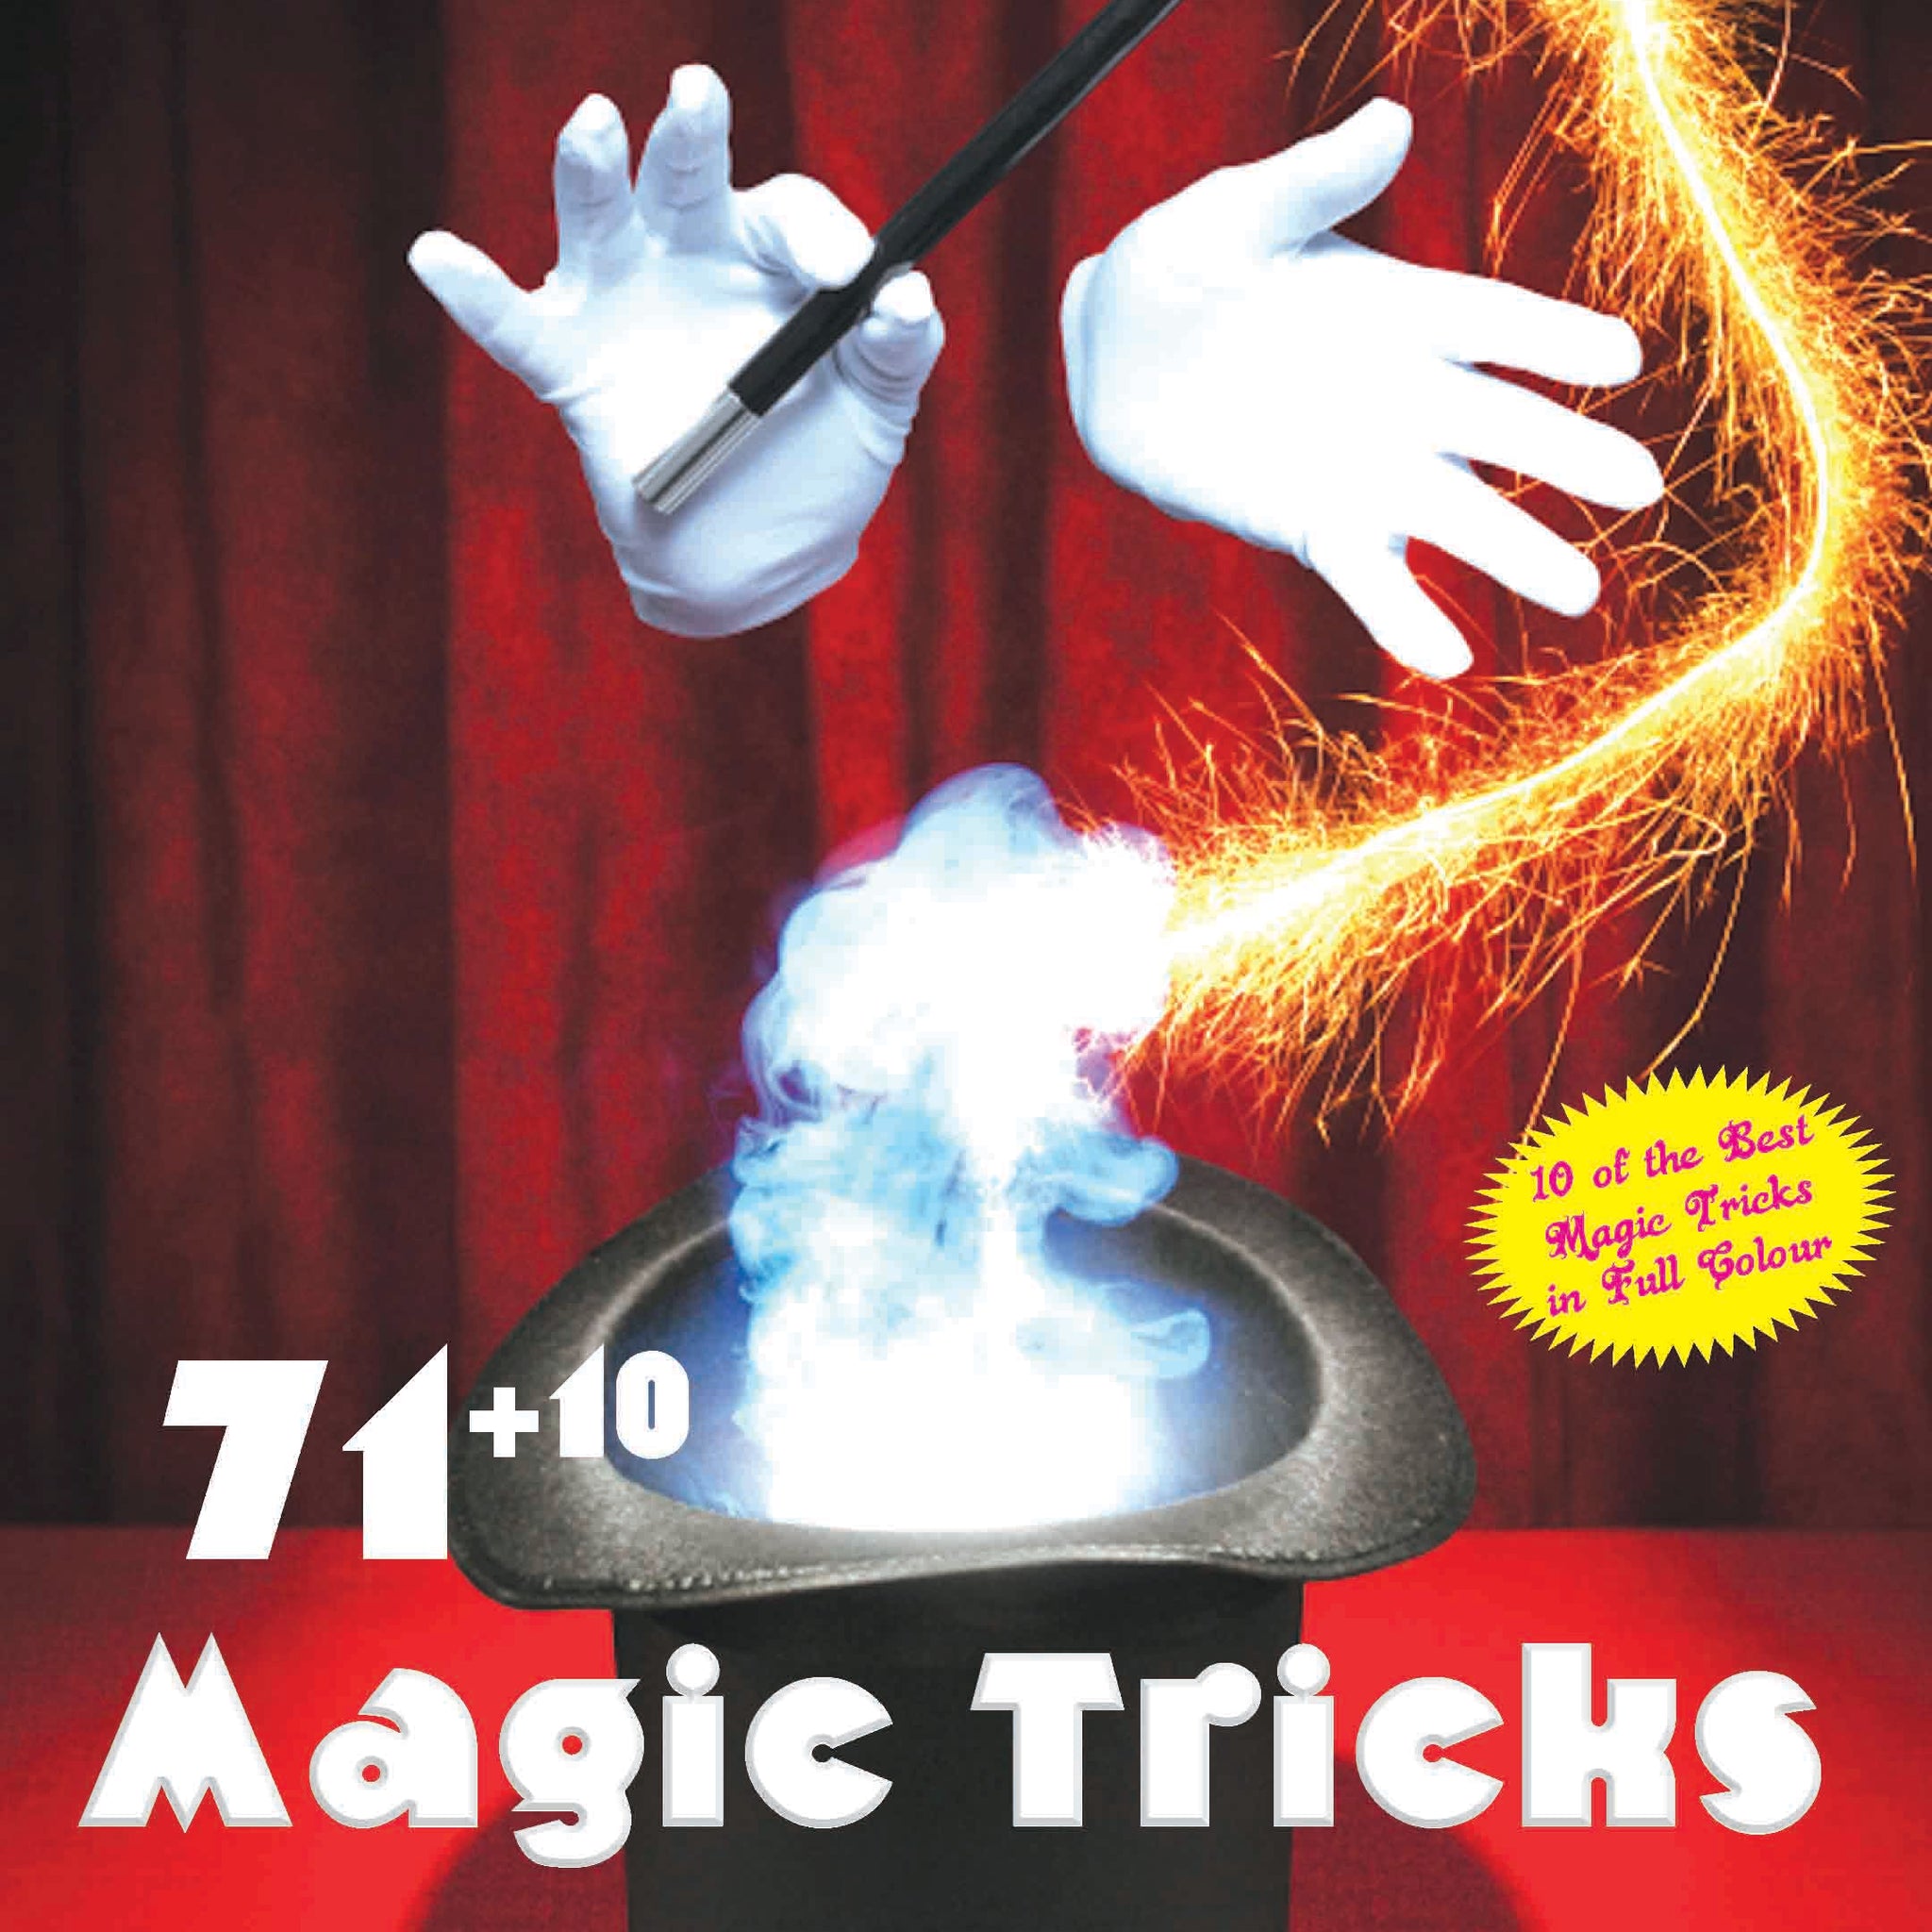 71+10 Magic Tricks For Children